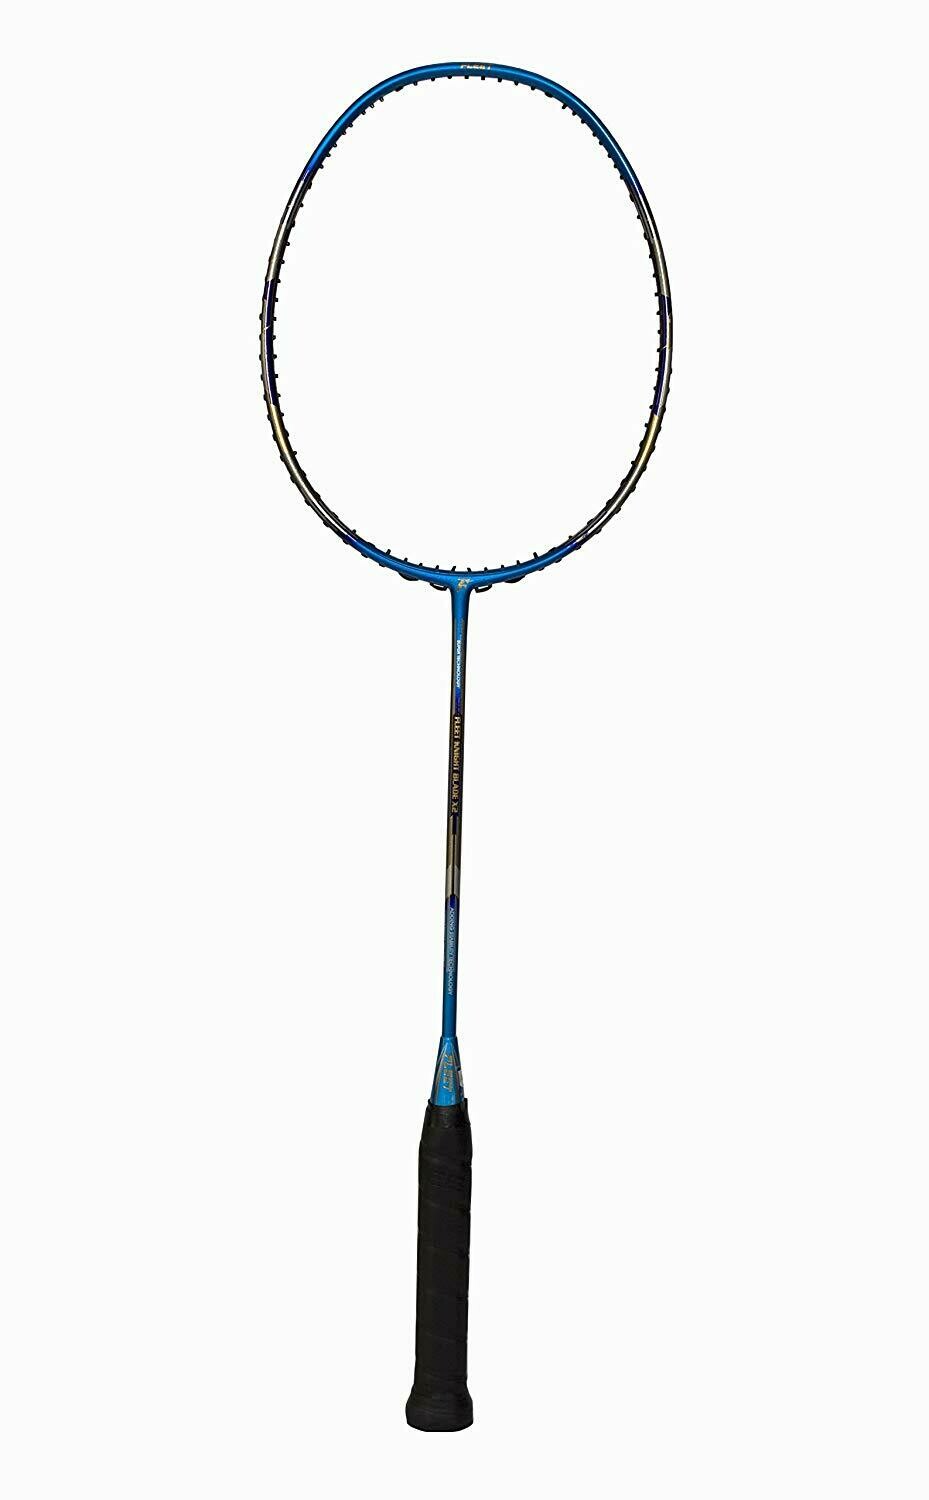 FLEET Knight Blade X2 Unstrung Badminton Racquet Designed in Korea